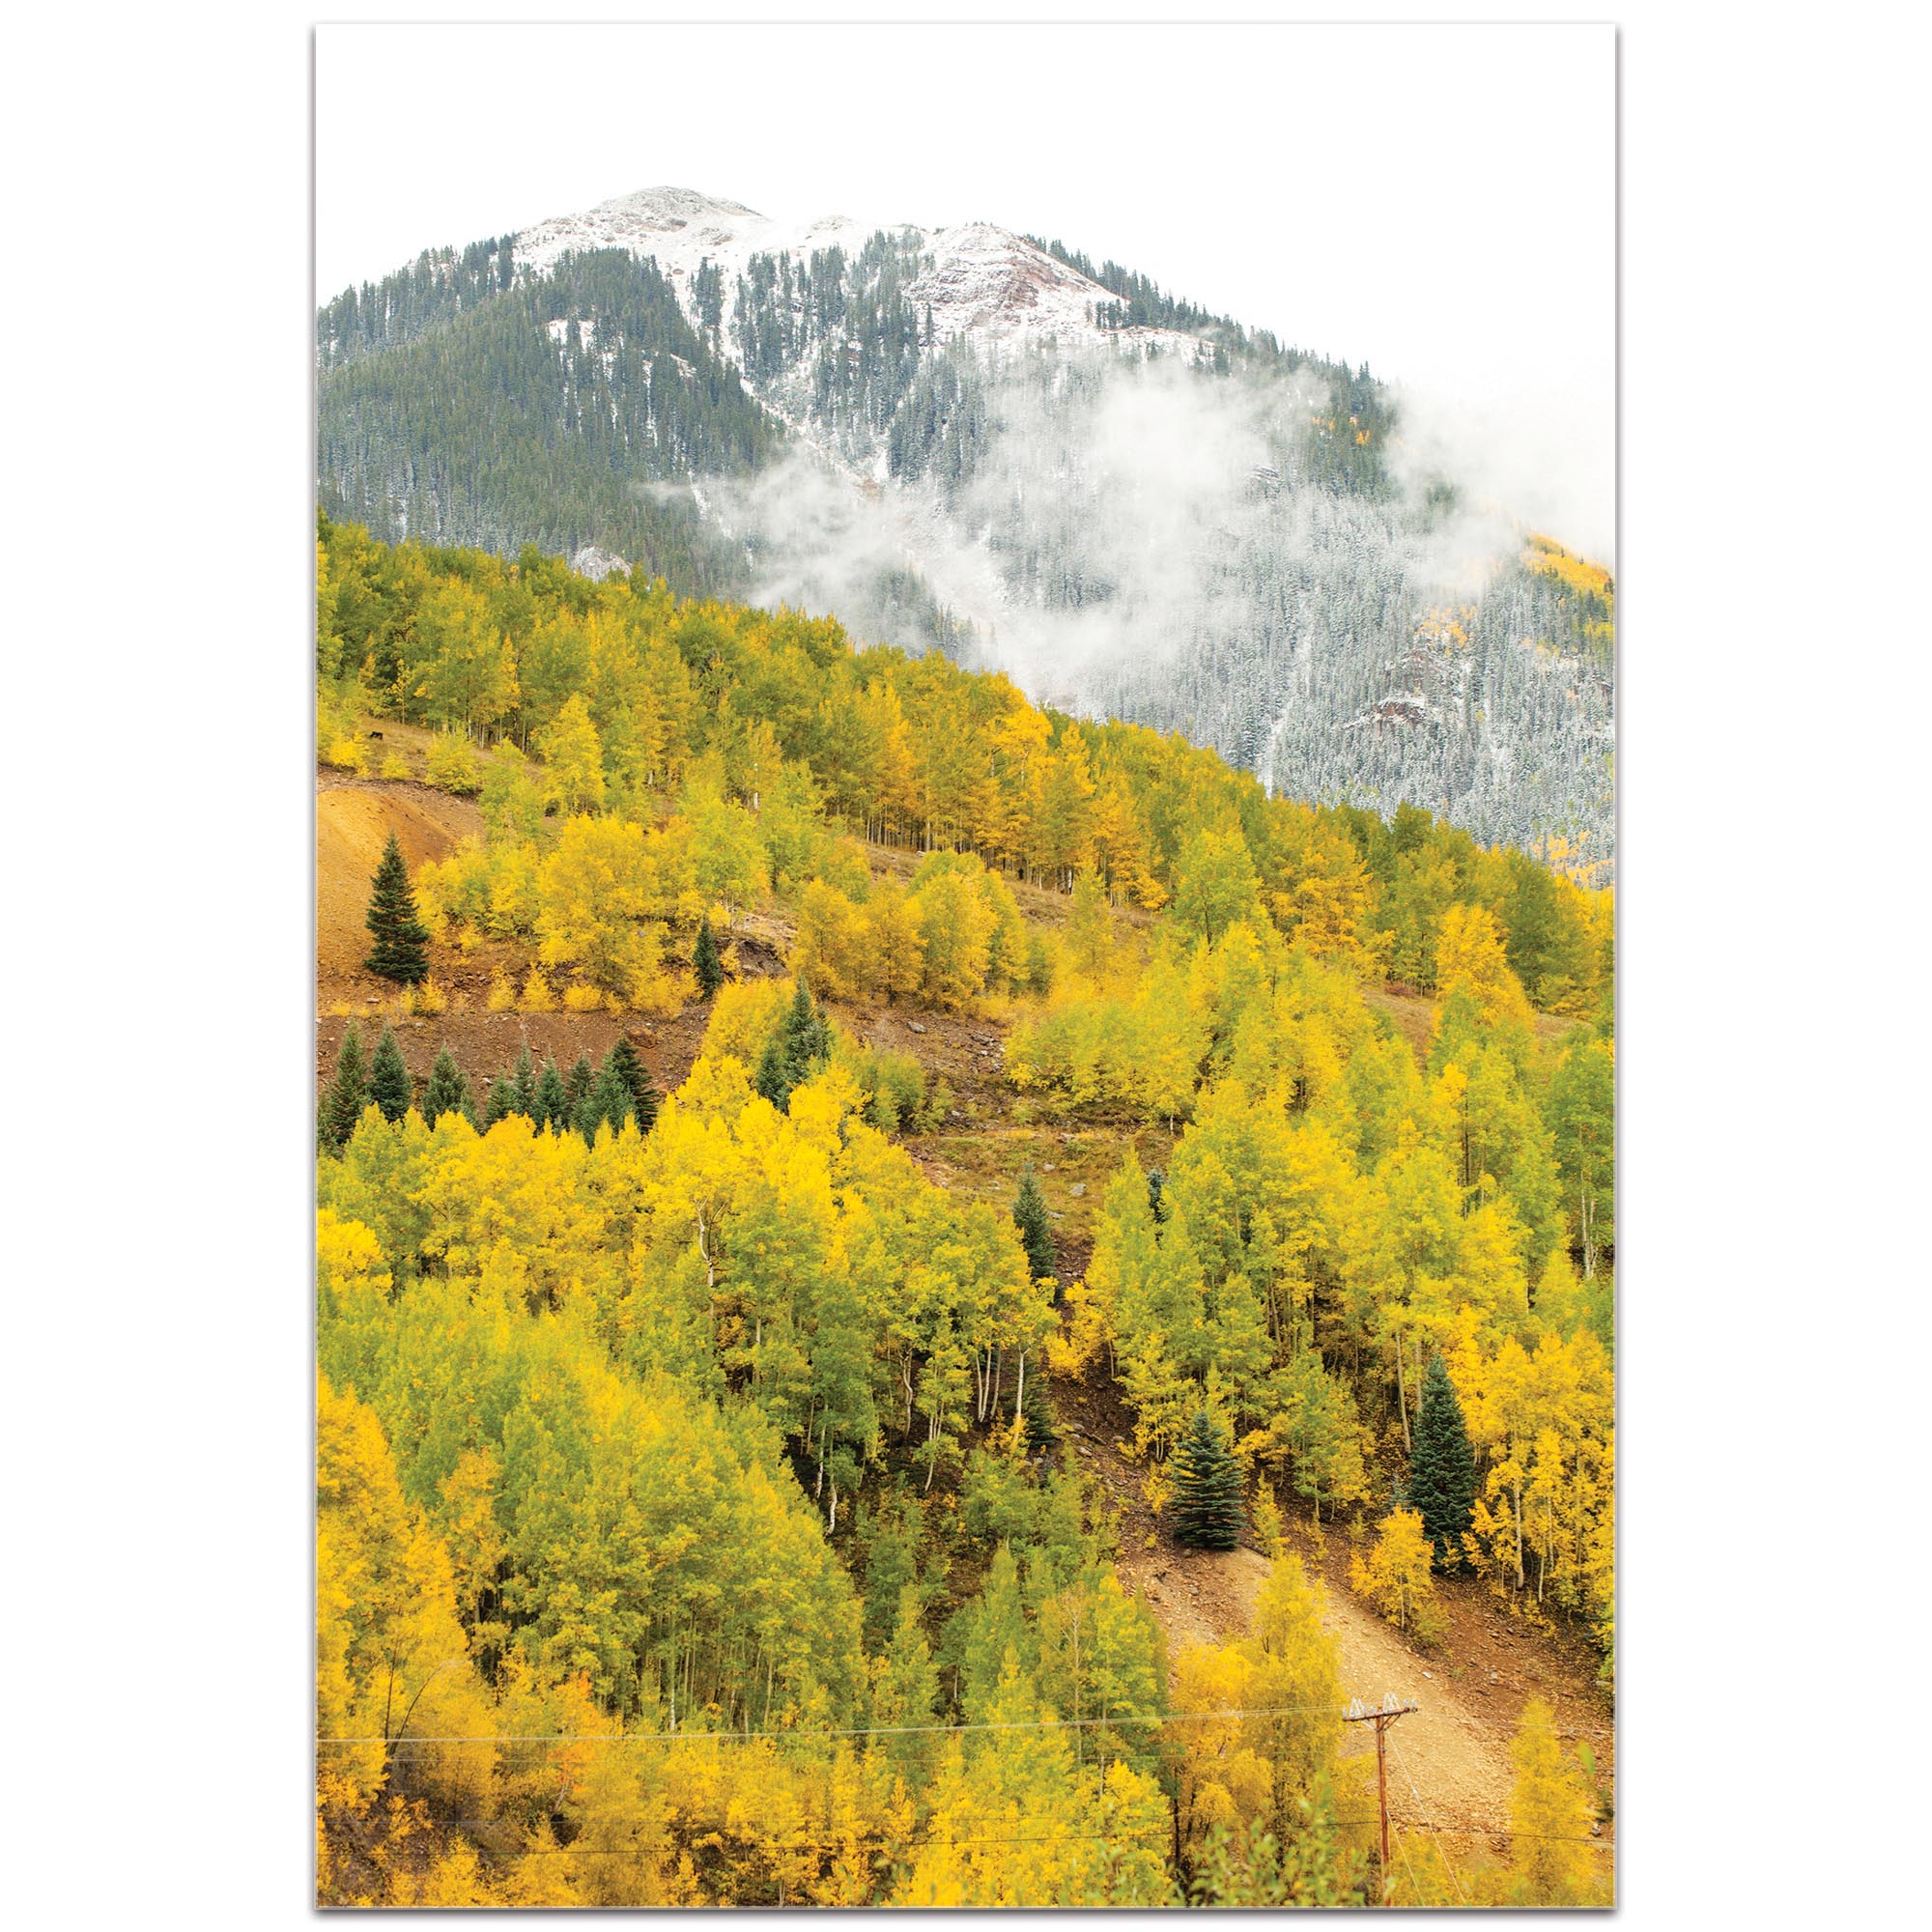 Landscape Photography 'Changing Season' - Autumn Nature Art on Metal or Plexiglass - Image 2